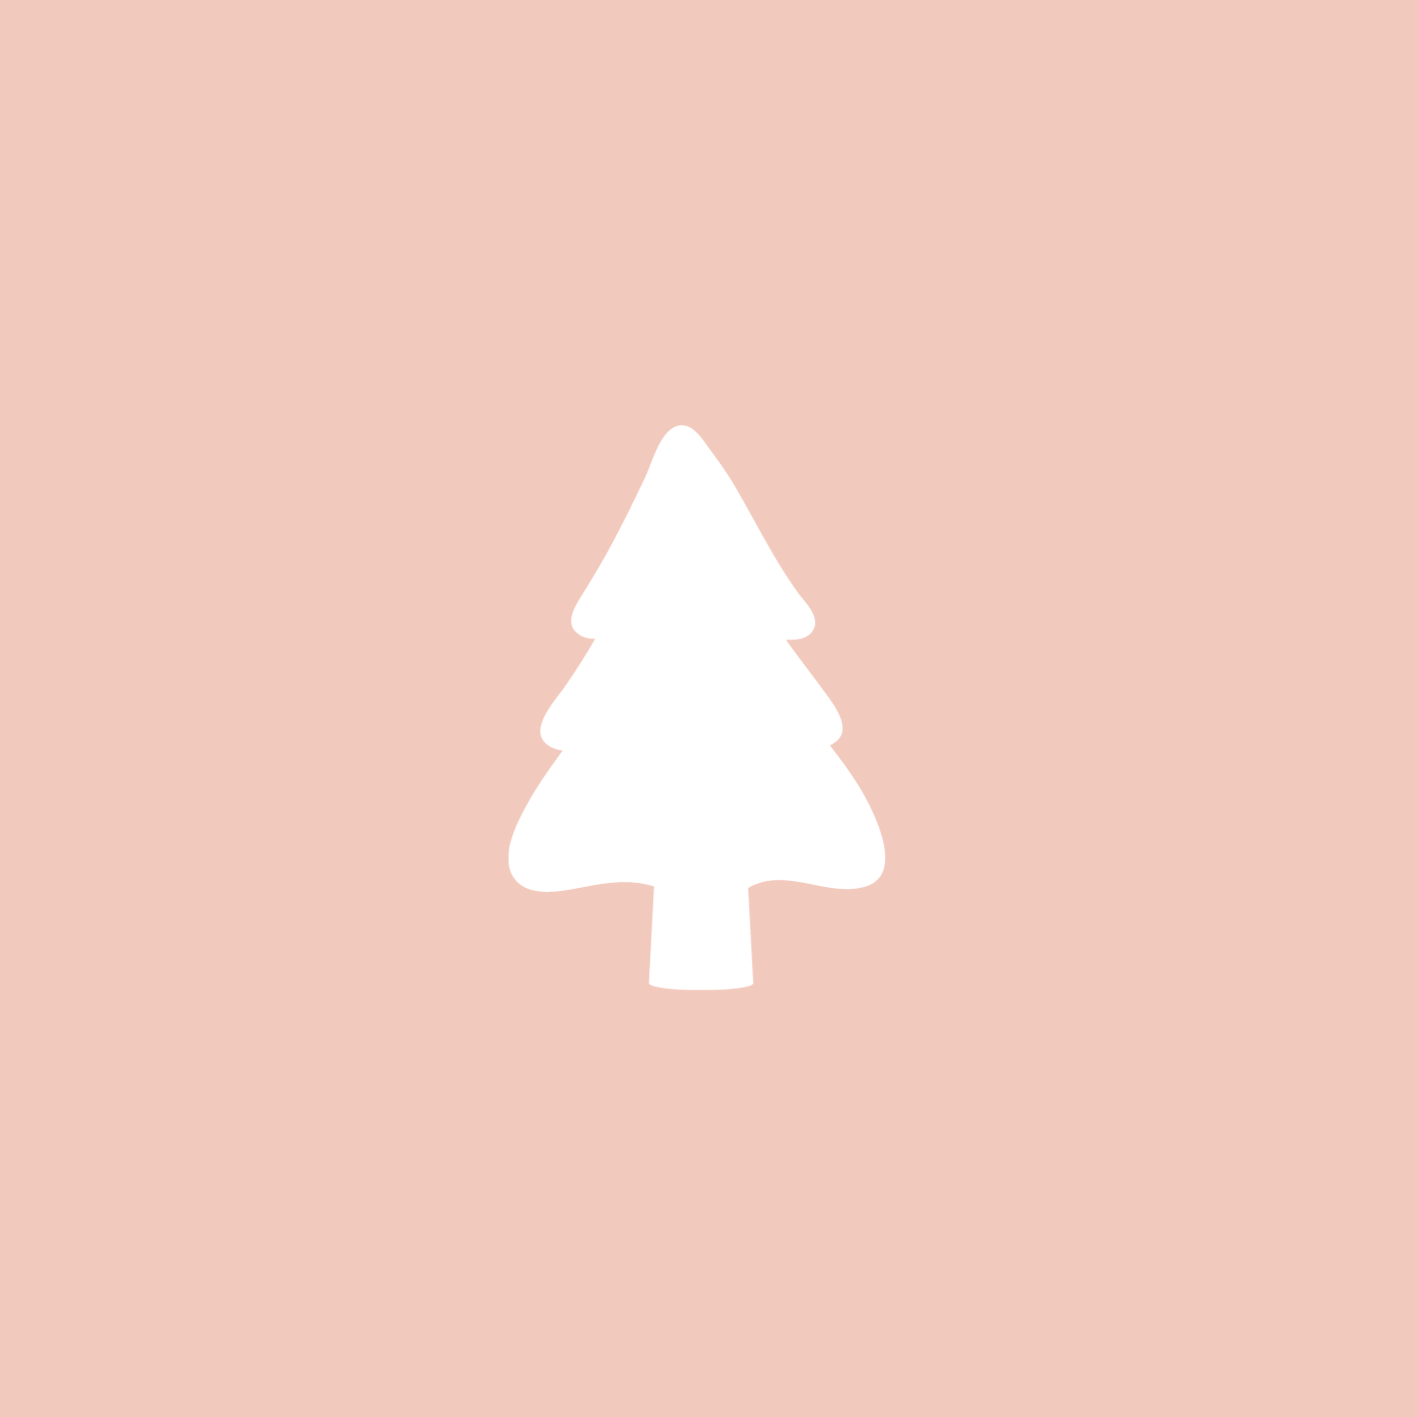 A white BigLittleGifting Christmas tree on a pink background.